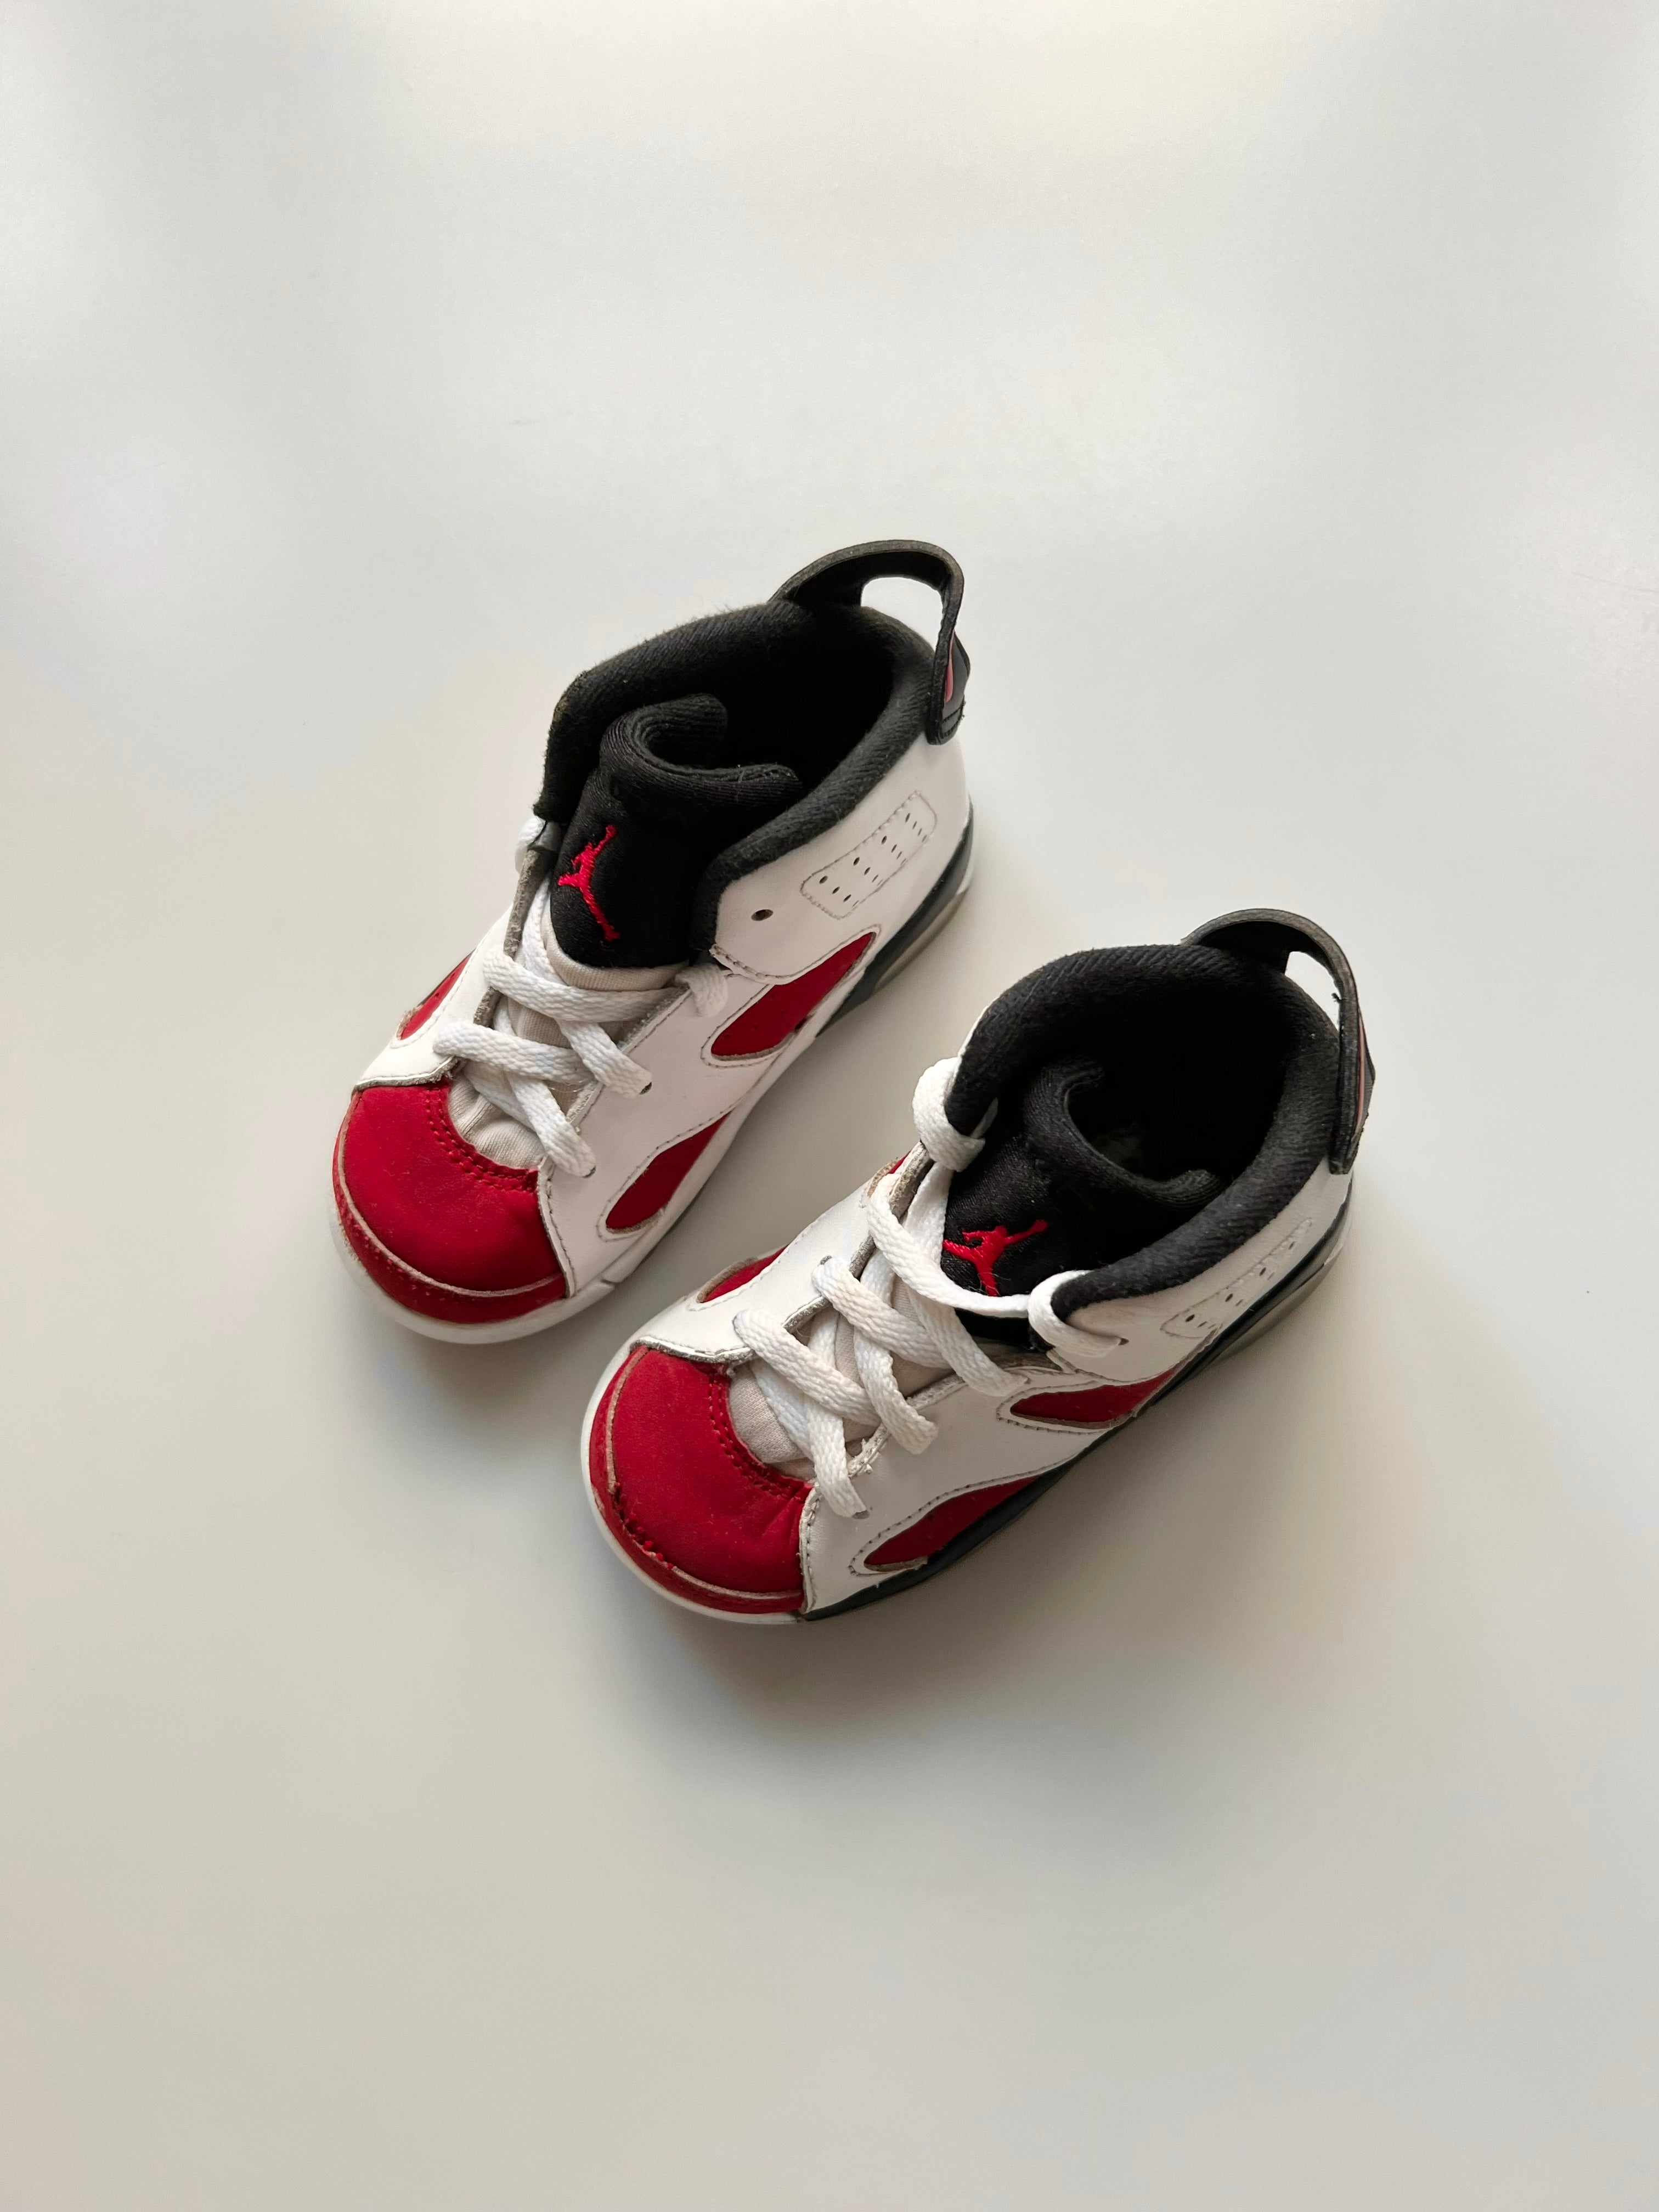 Air Jordan 6 Retro Carmine 2013 Size 6.5